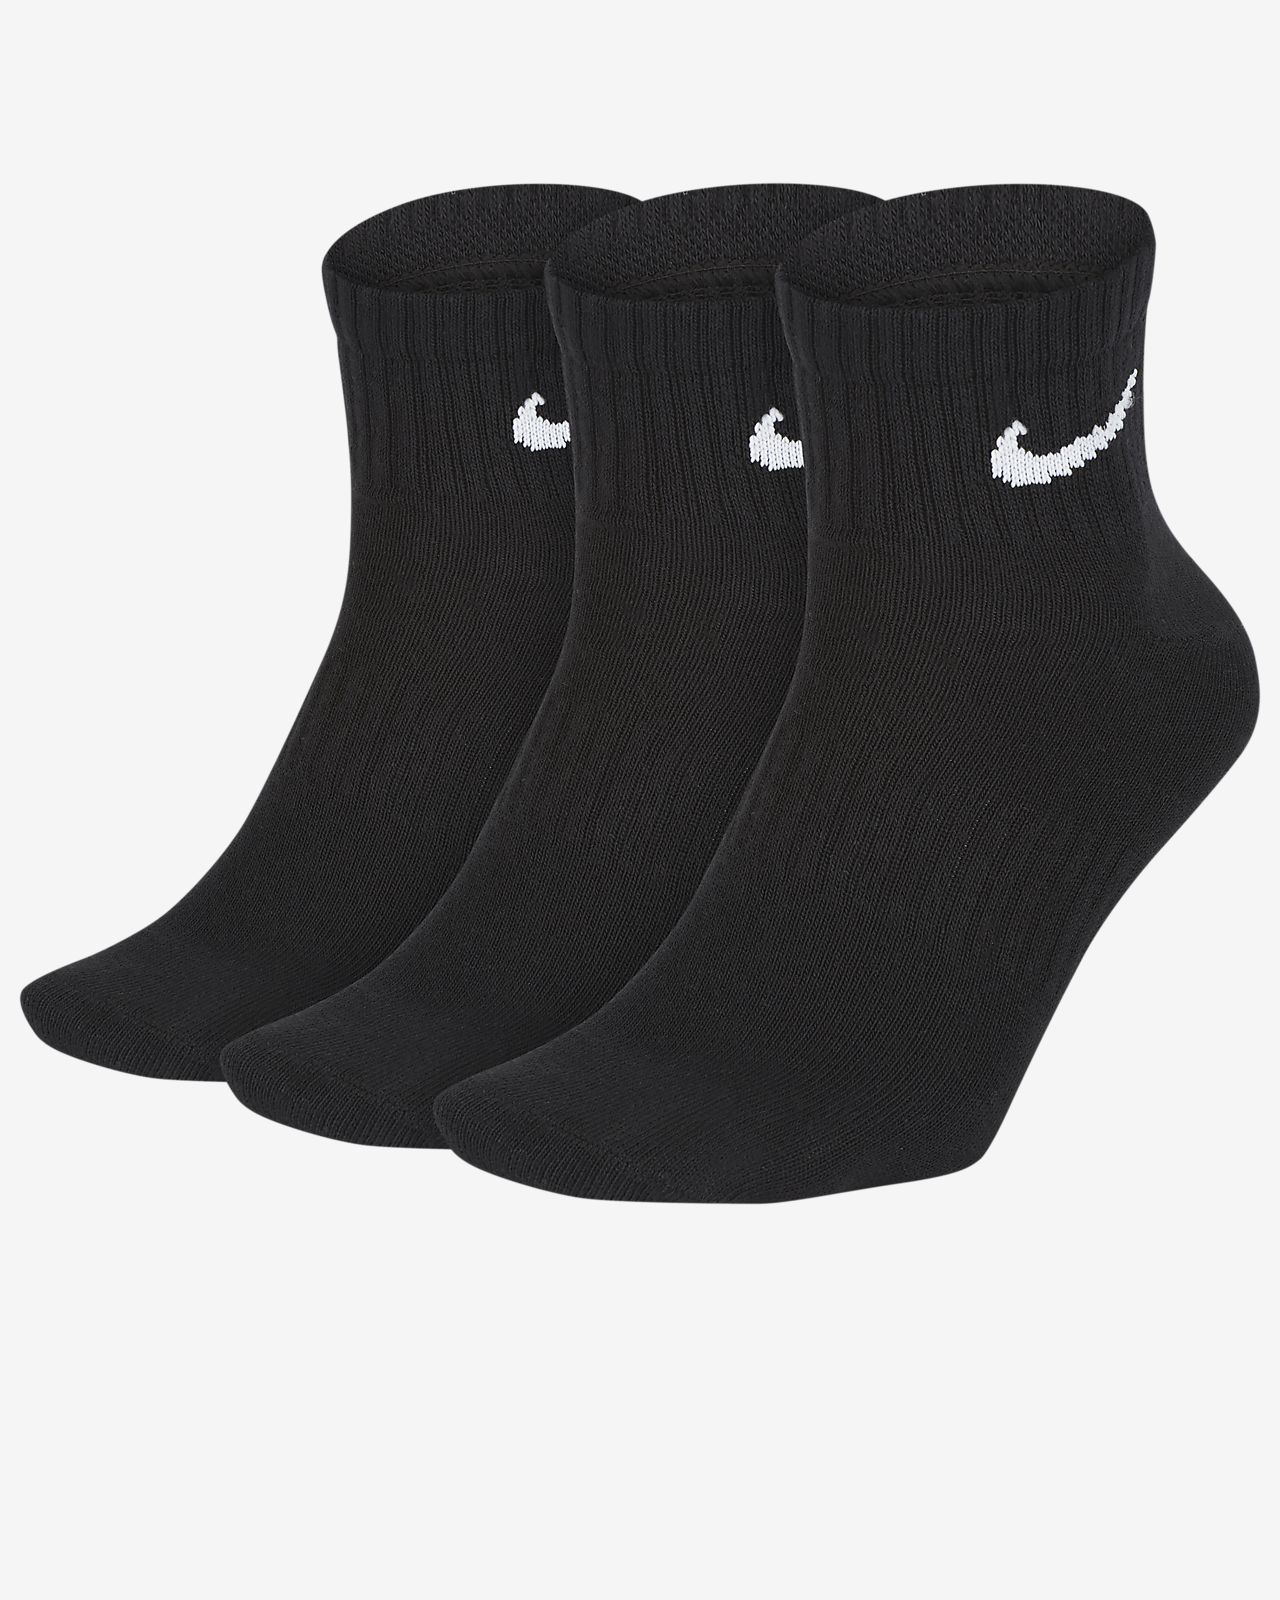 black nike sports socks